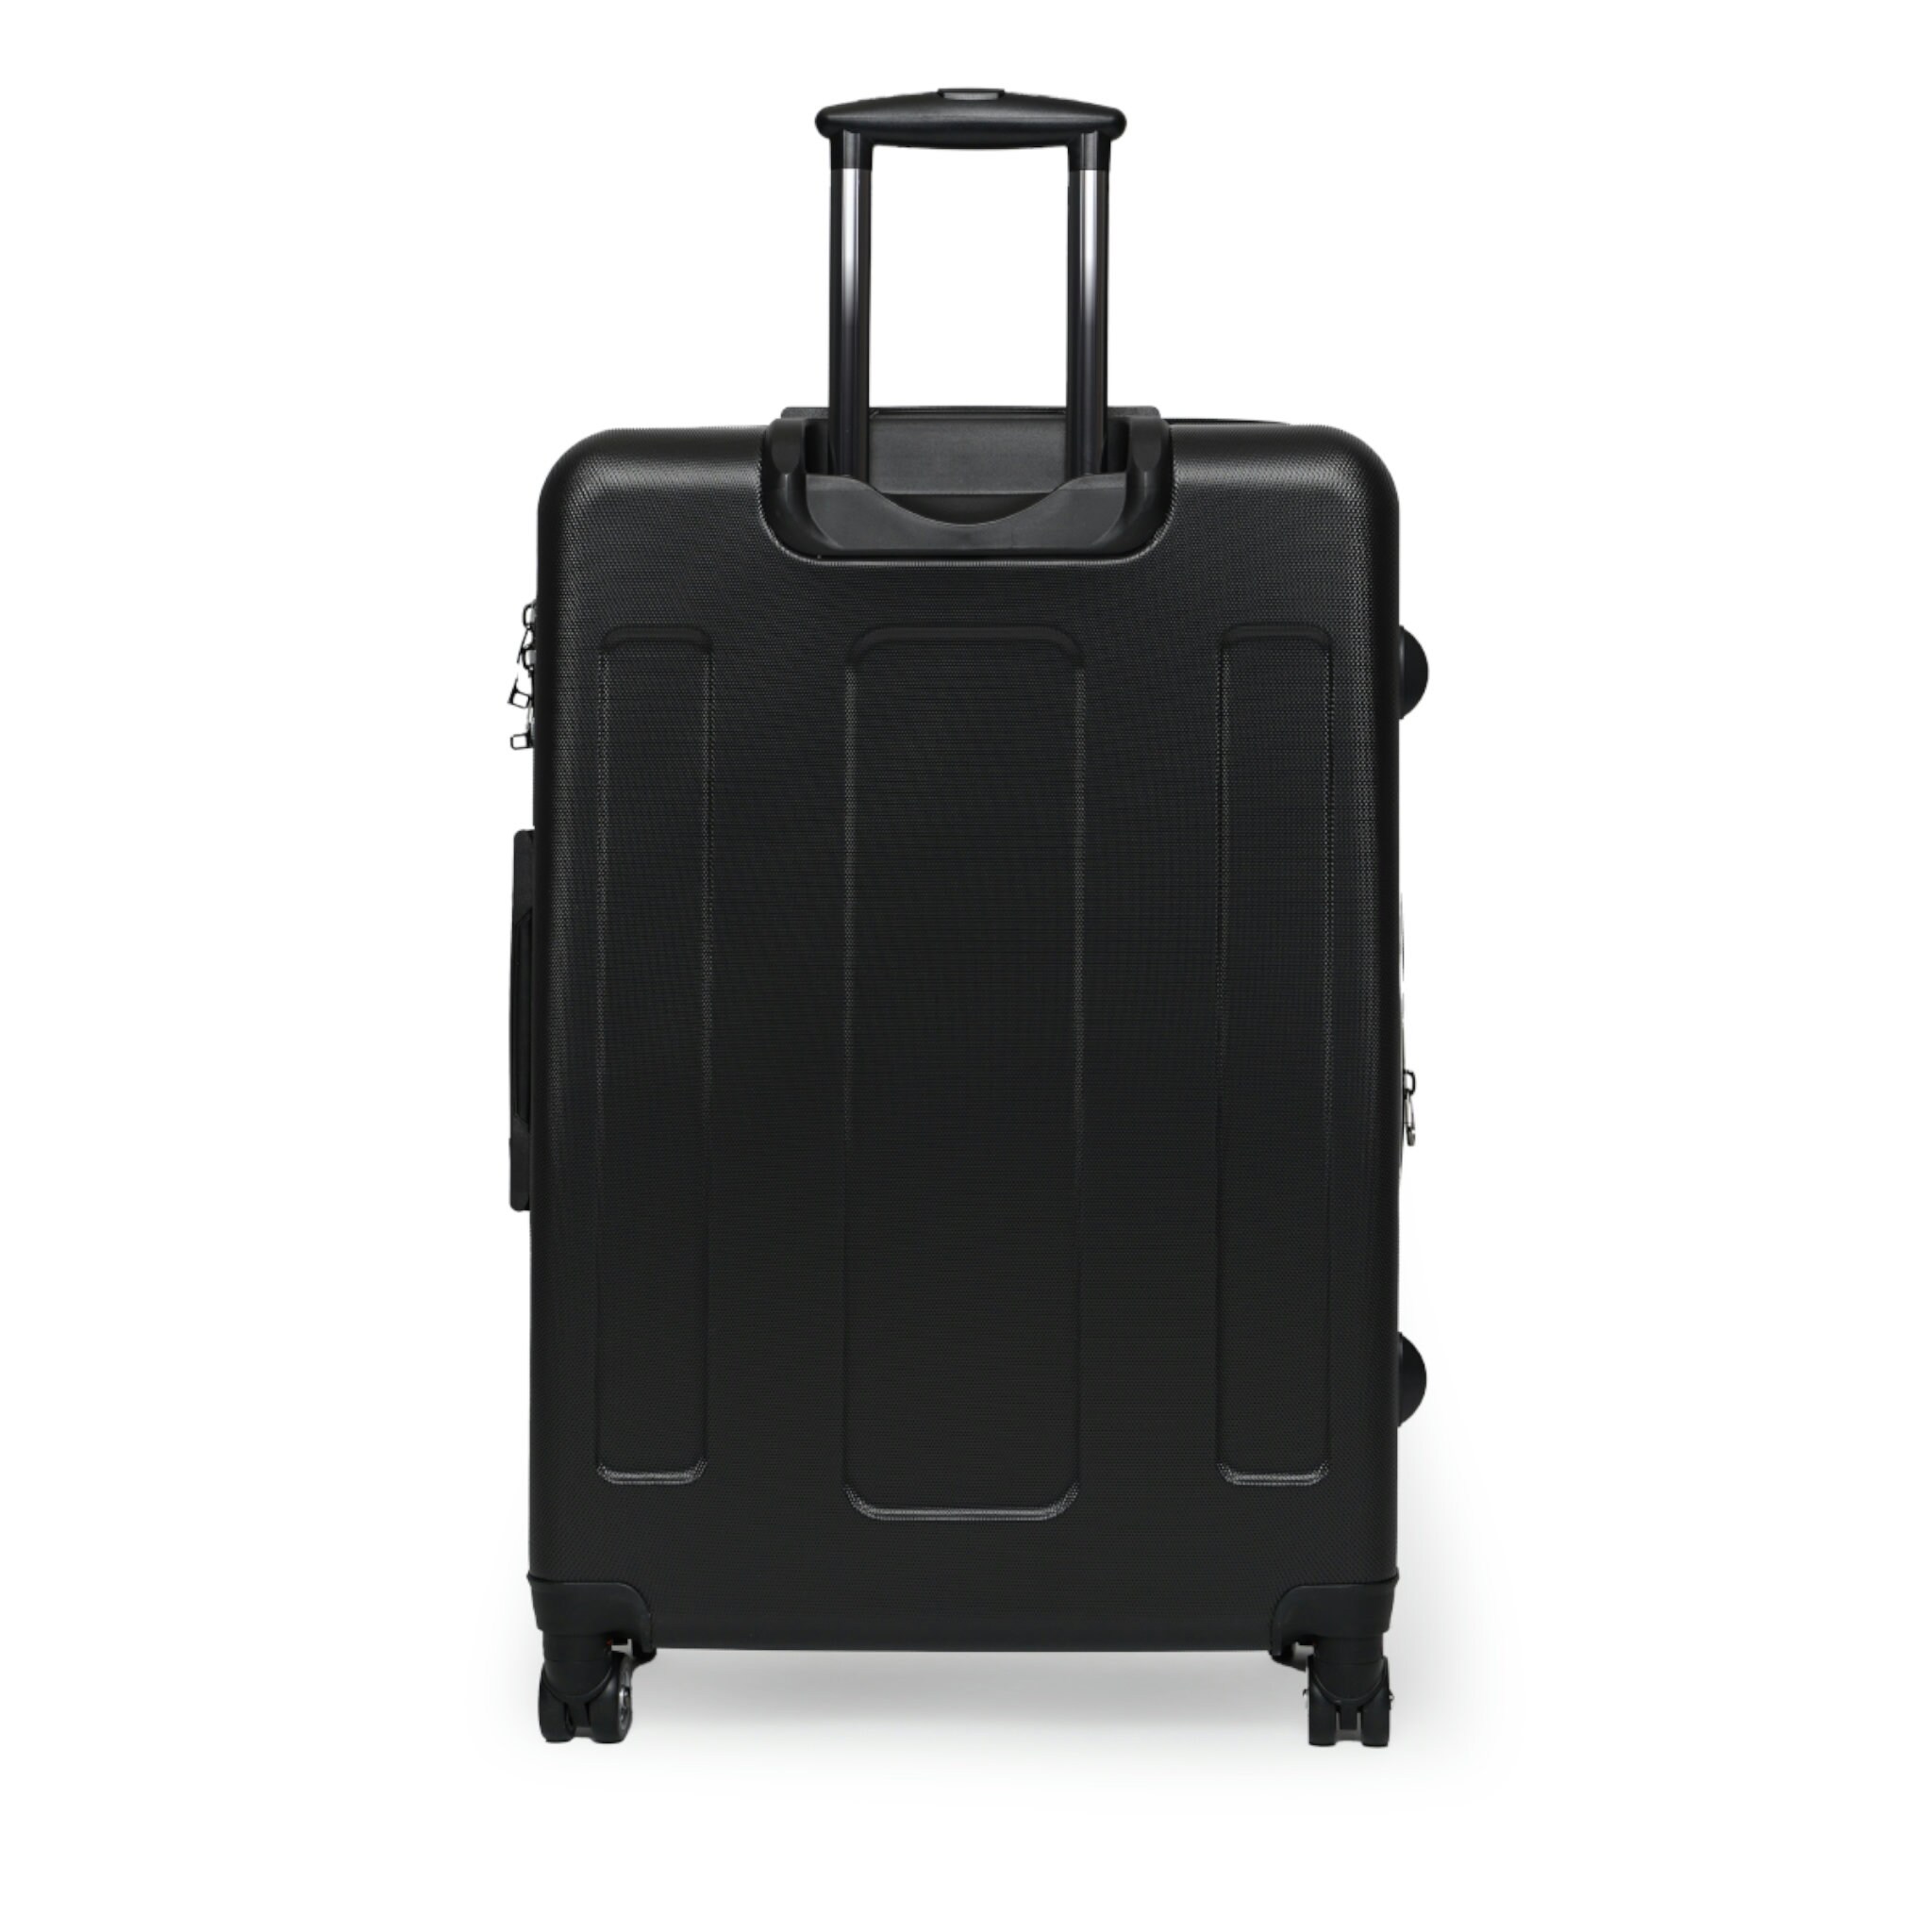 Atomic Cat Cabin Suitcase, Mid Century Modern Teal Blue, Mustard Yellow, Cream MCM Starburst Carry-On Roller Travel Luggage Set